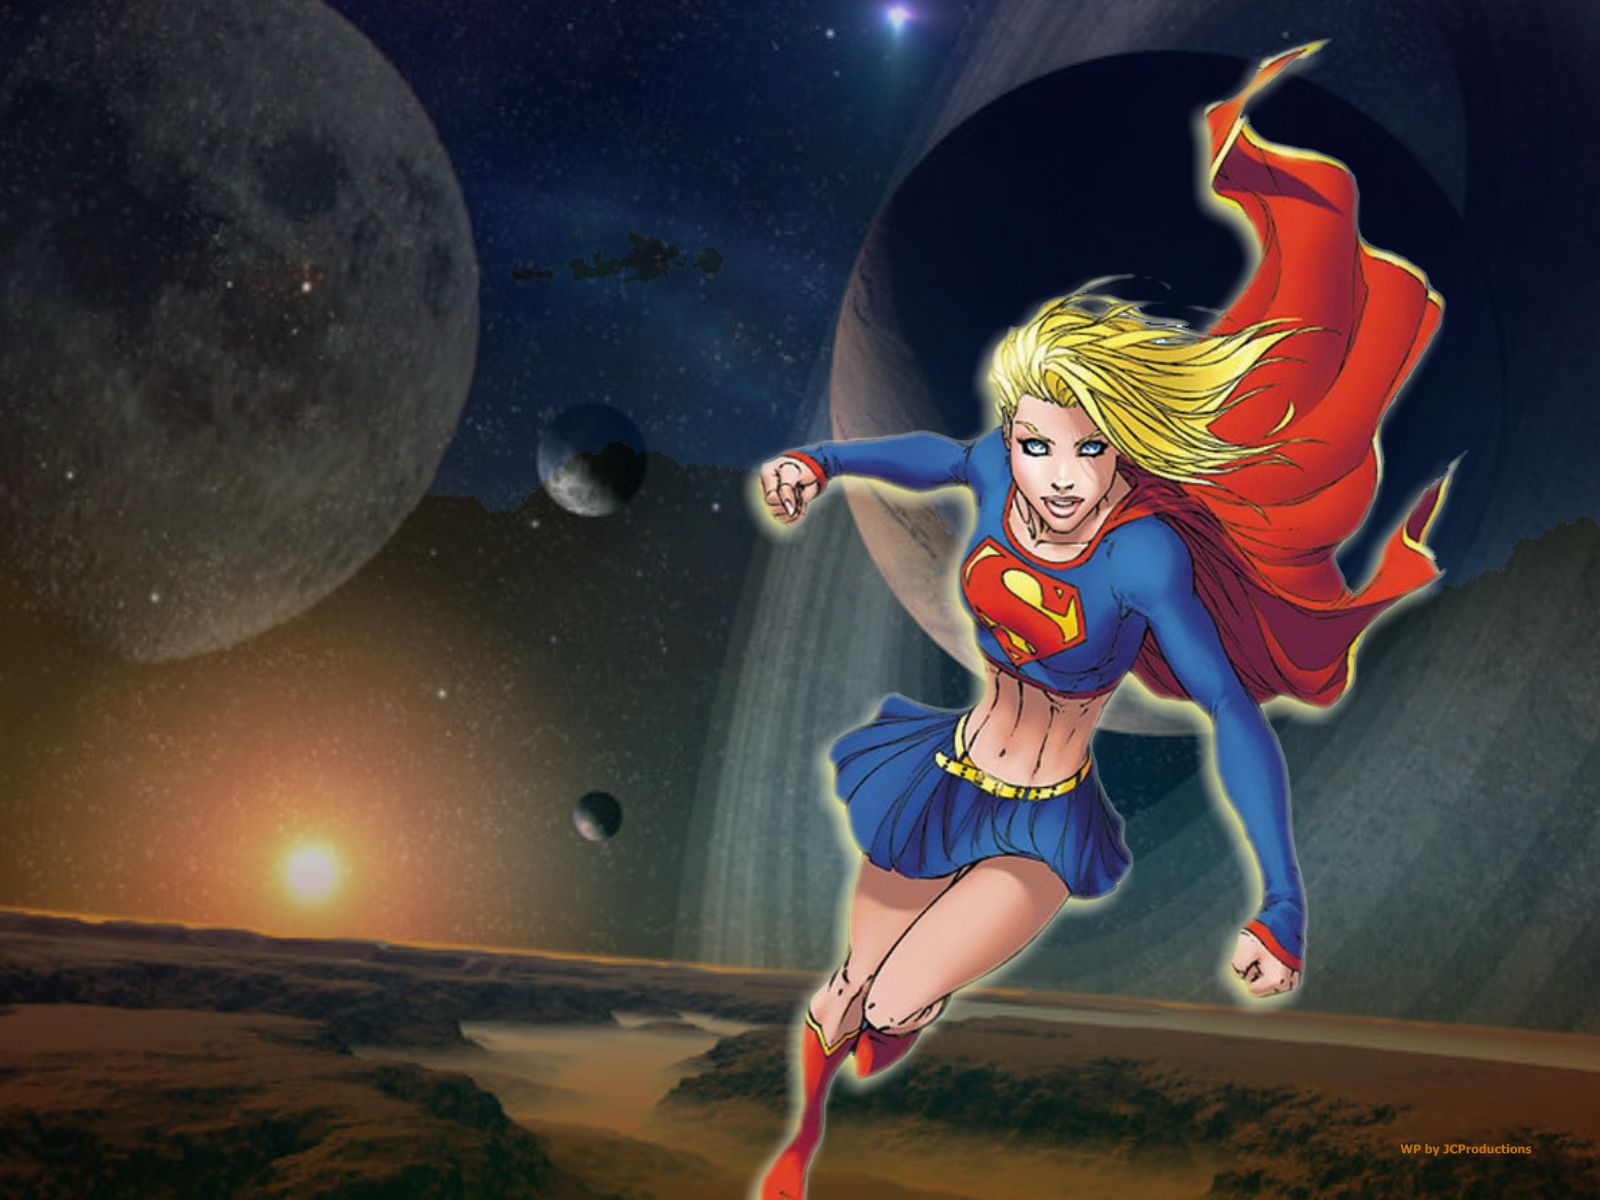 Download HQ supergirl, kara, lex luthor, supergirl wallpapers, superman, clark kent, lois lane, lana lang Character Supergirl wallpaper / 1600x1200